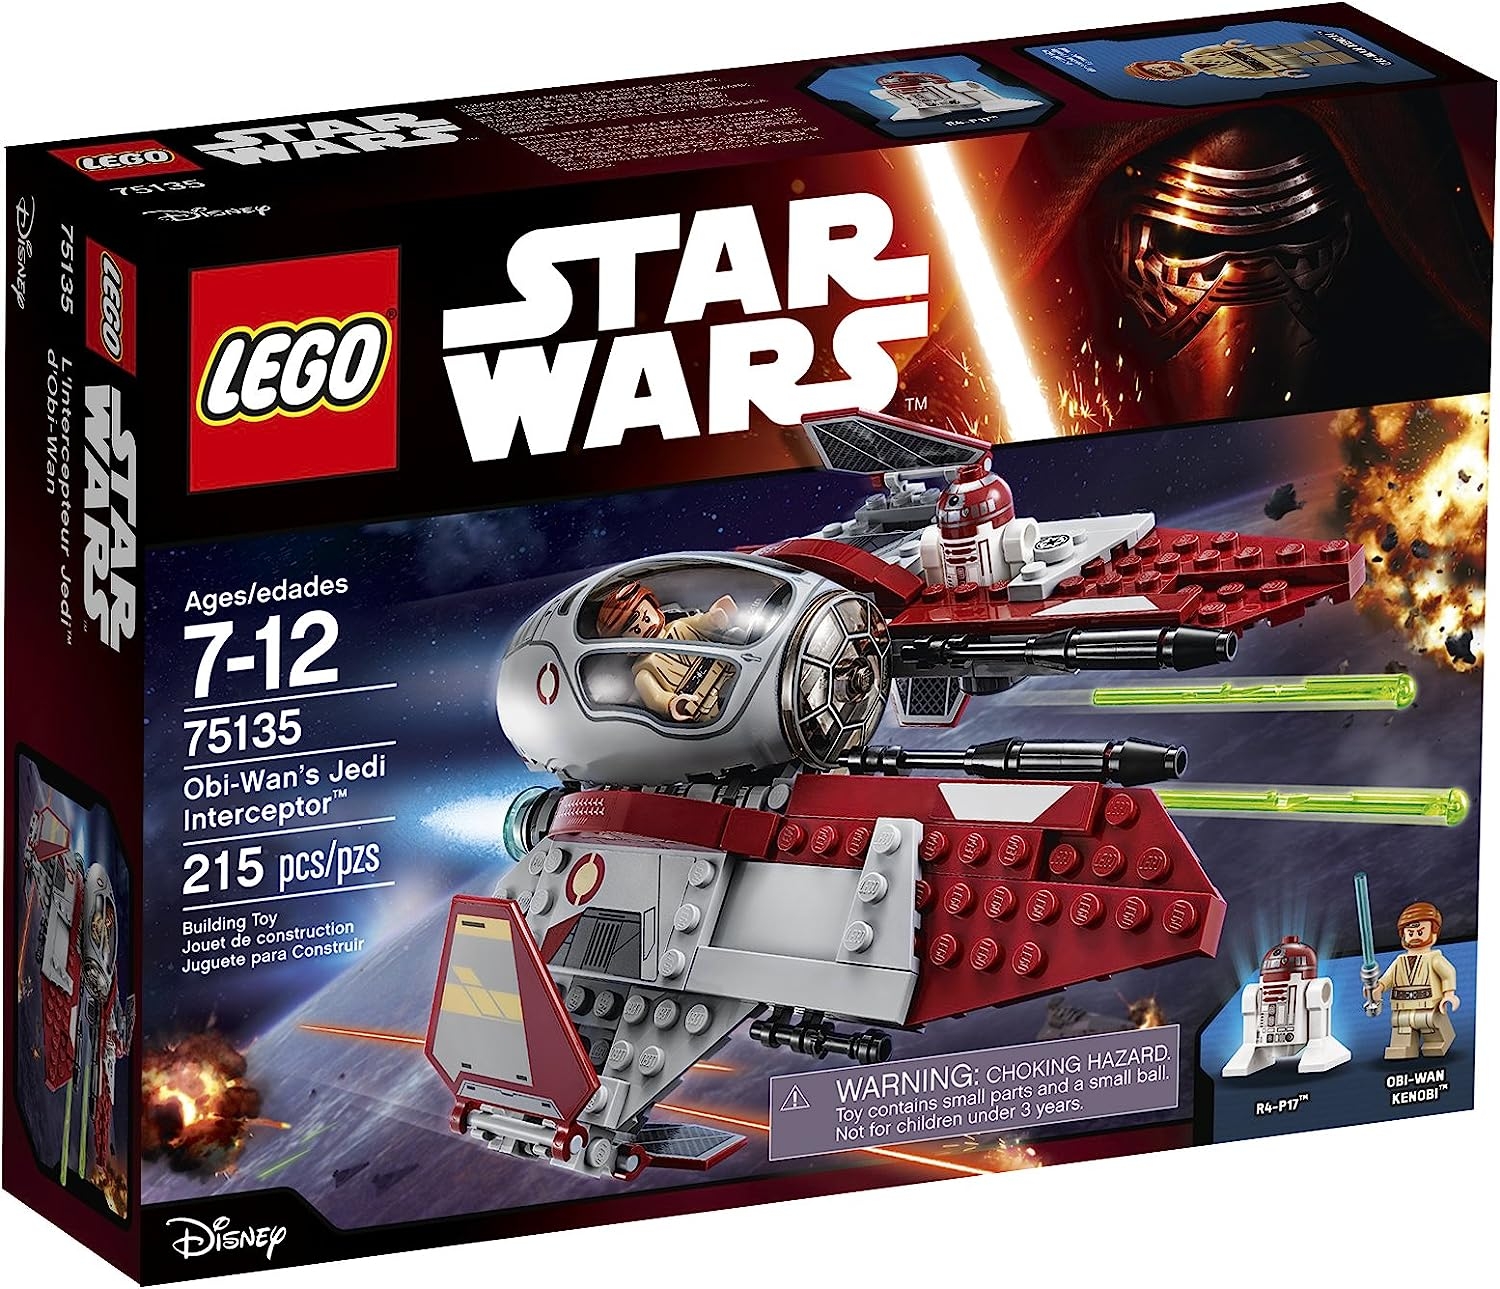 LEGO Star Wars OBI-Wan’s Jedi Interceptor 75135 Building Kit (215 Piece)   price checker   price checker Description Gallery